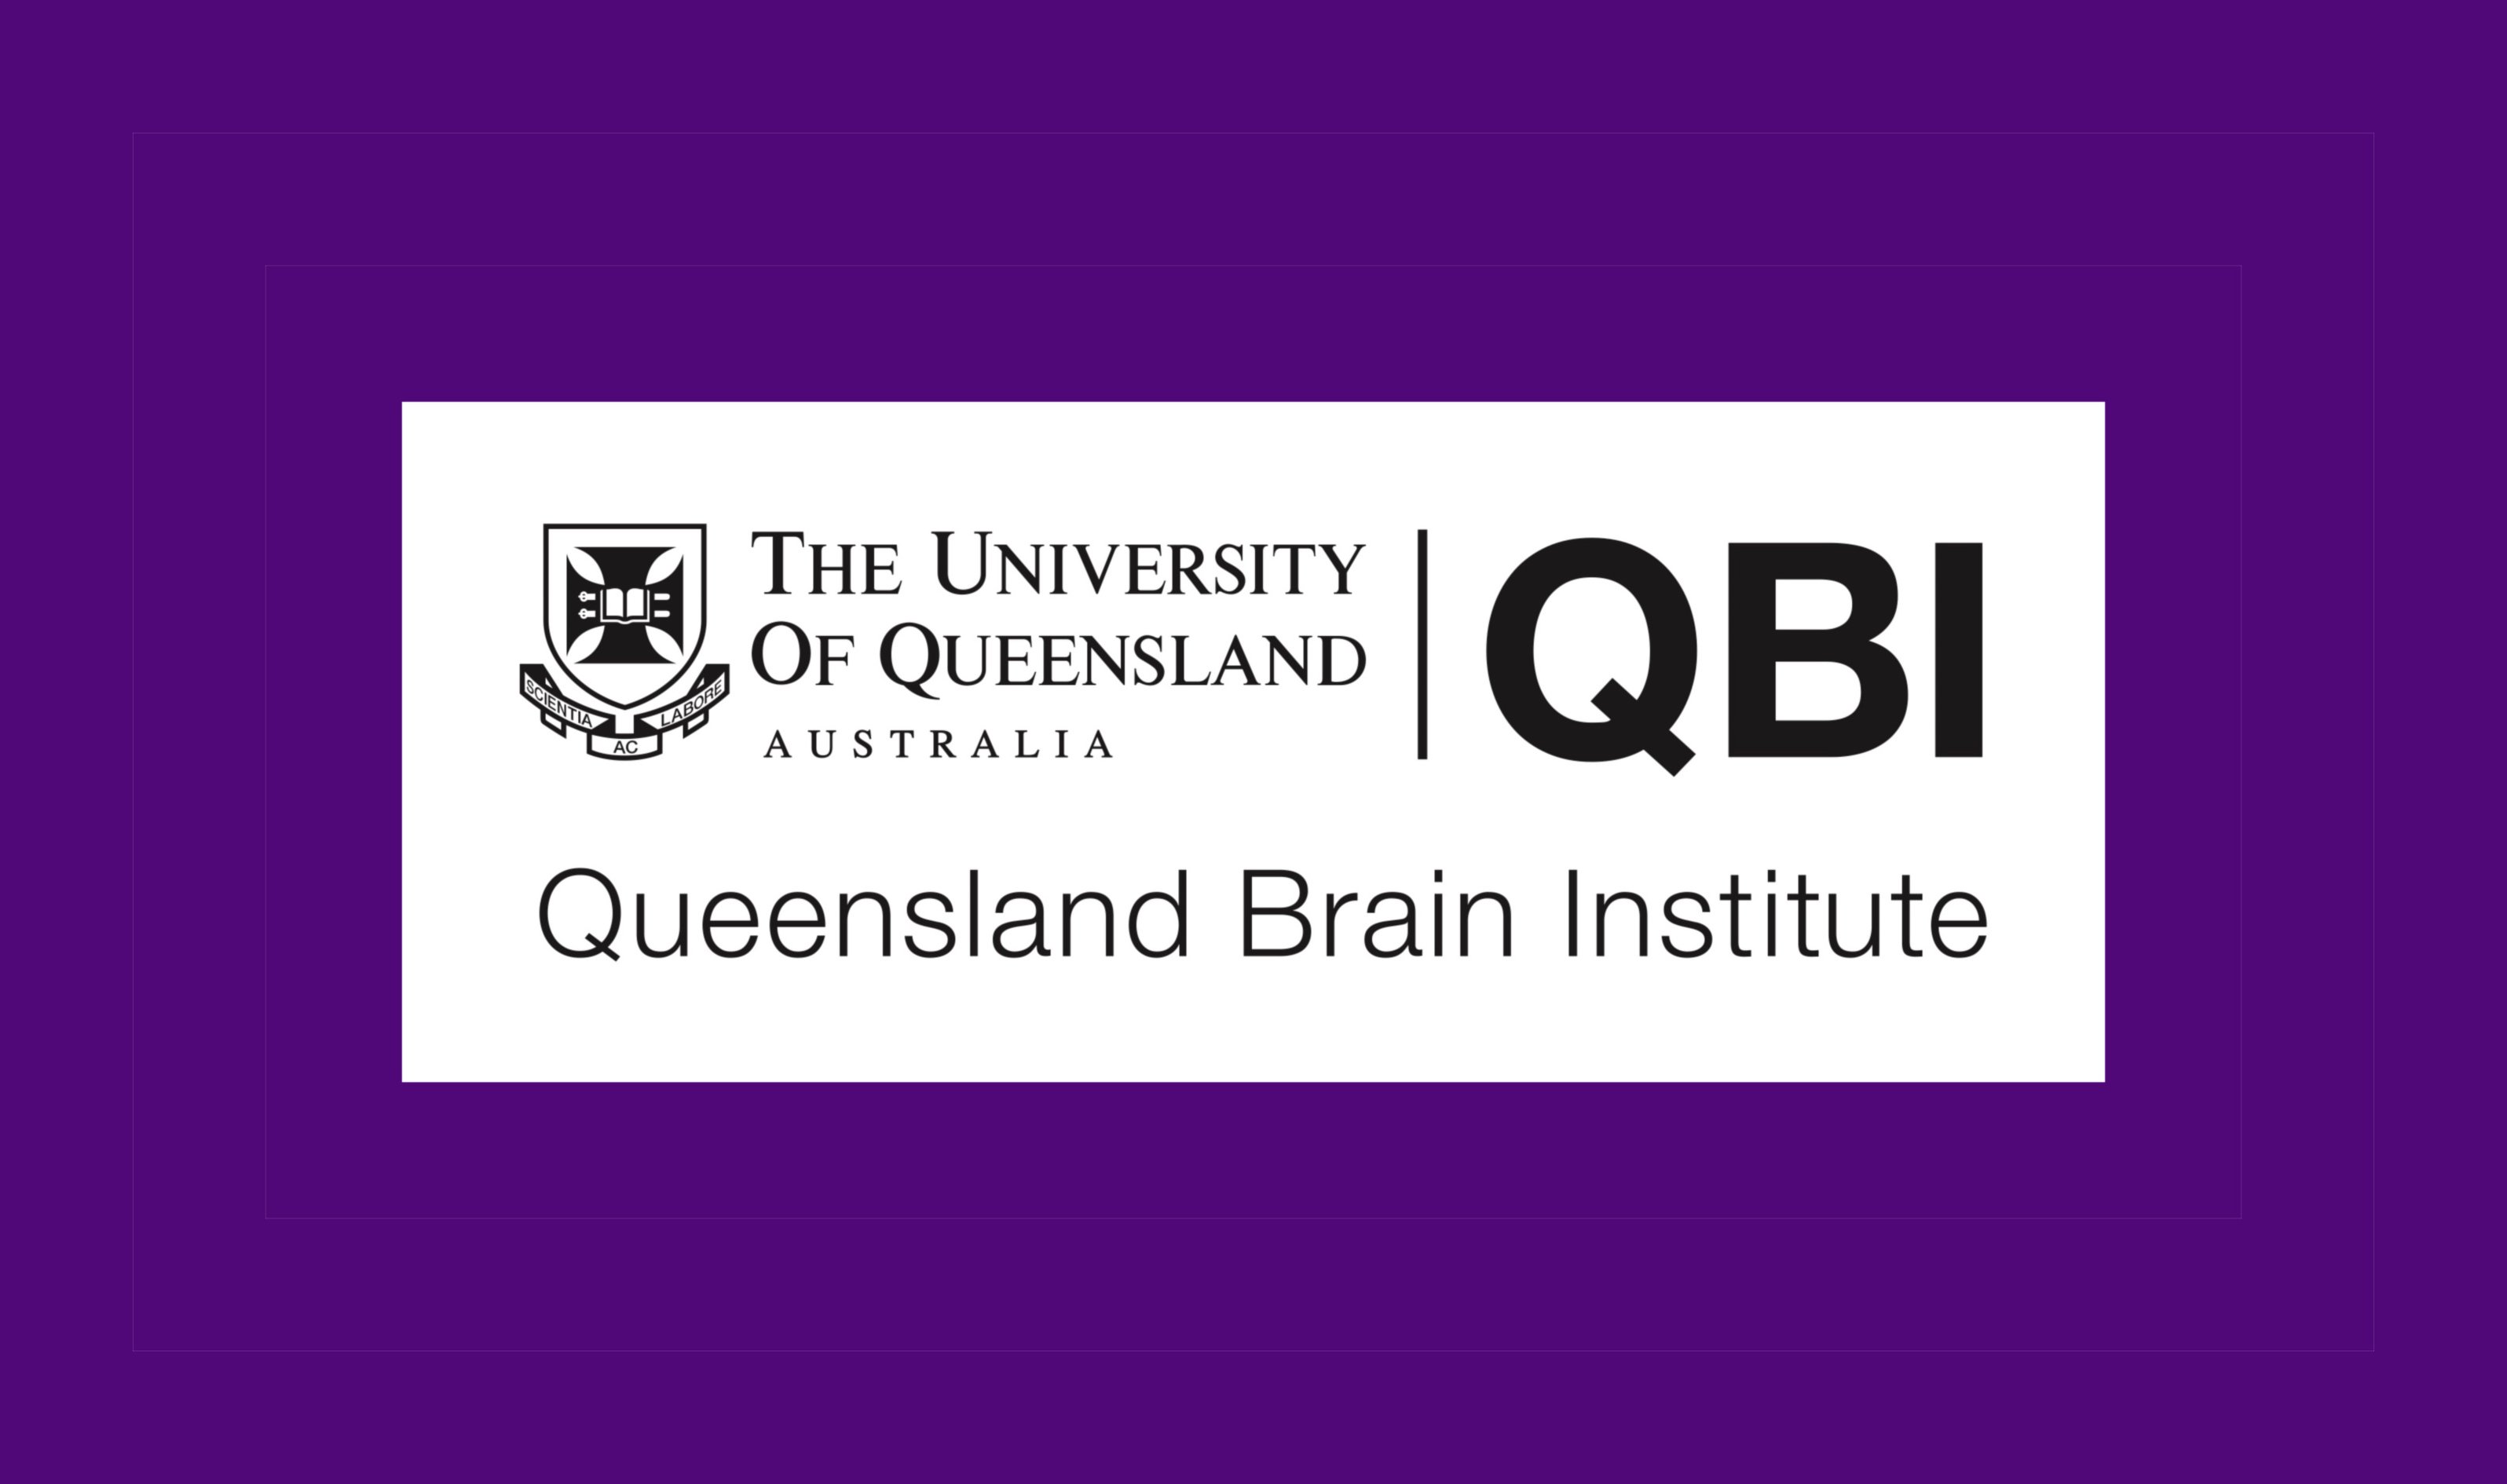 QBI, Queensland Brain Institute logo.